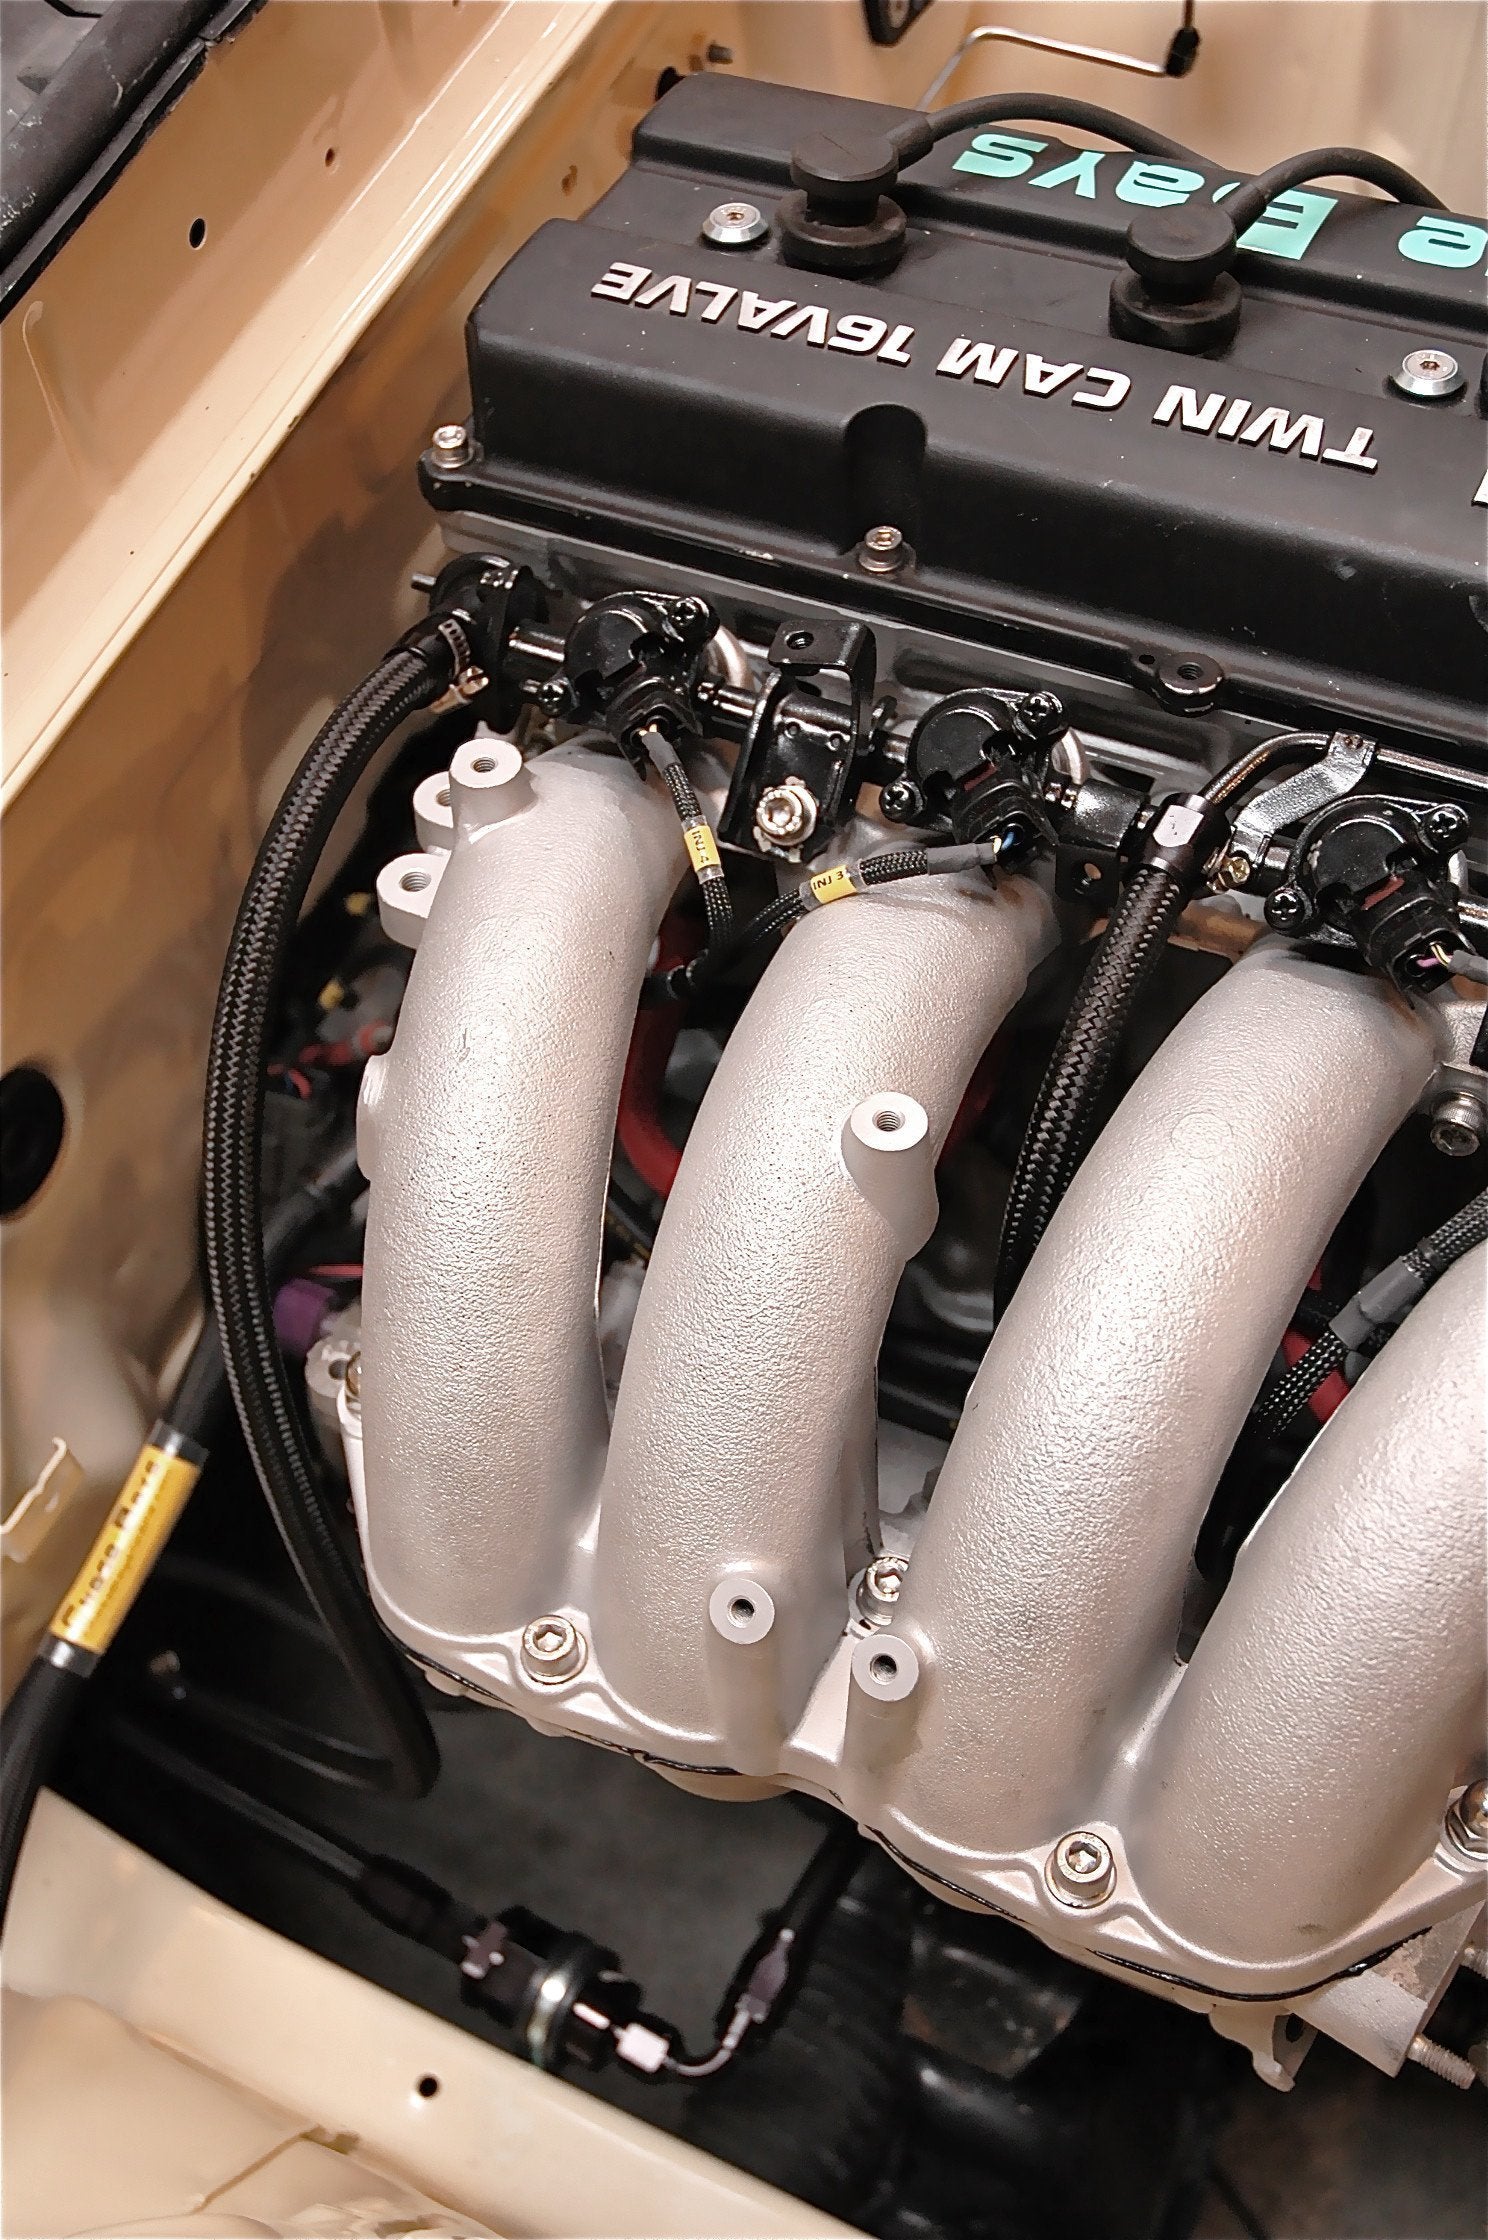 CHASE BAYS Nissan Skyline R32 R33 Fuel Line Kit with Nissan RB20DET RB25DET RB26DETT Engine - PARTS33 GmbH